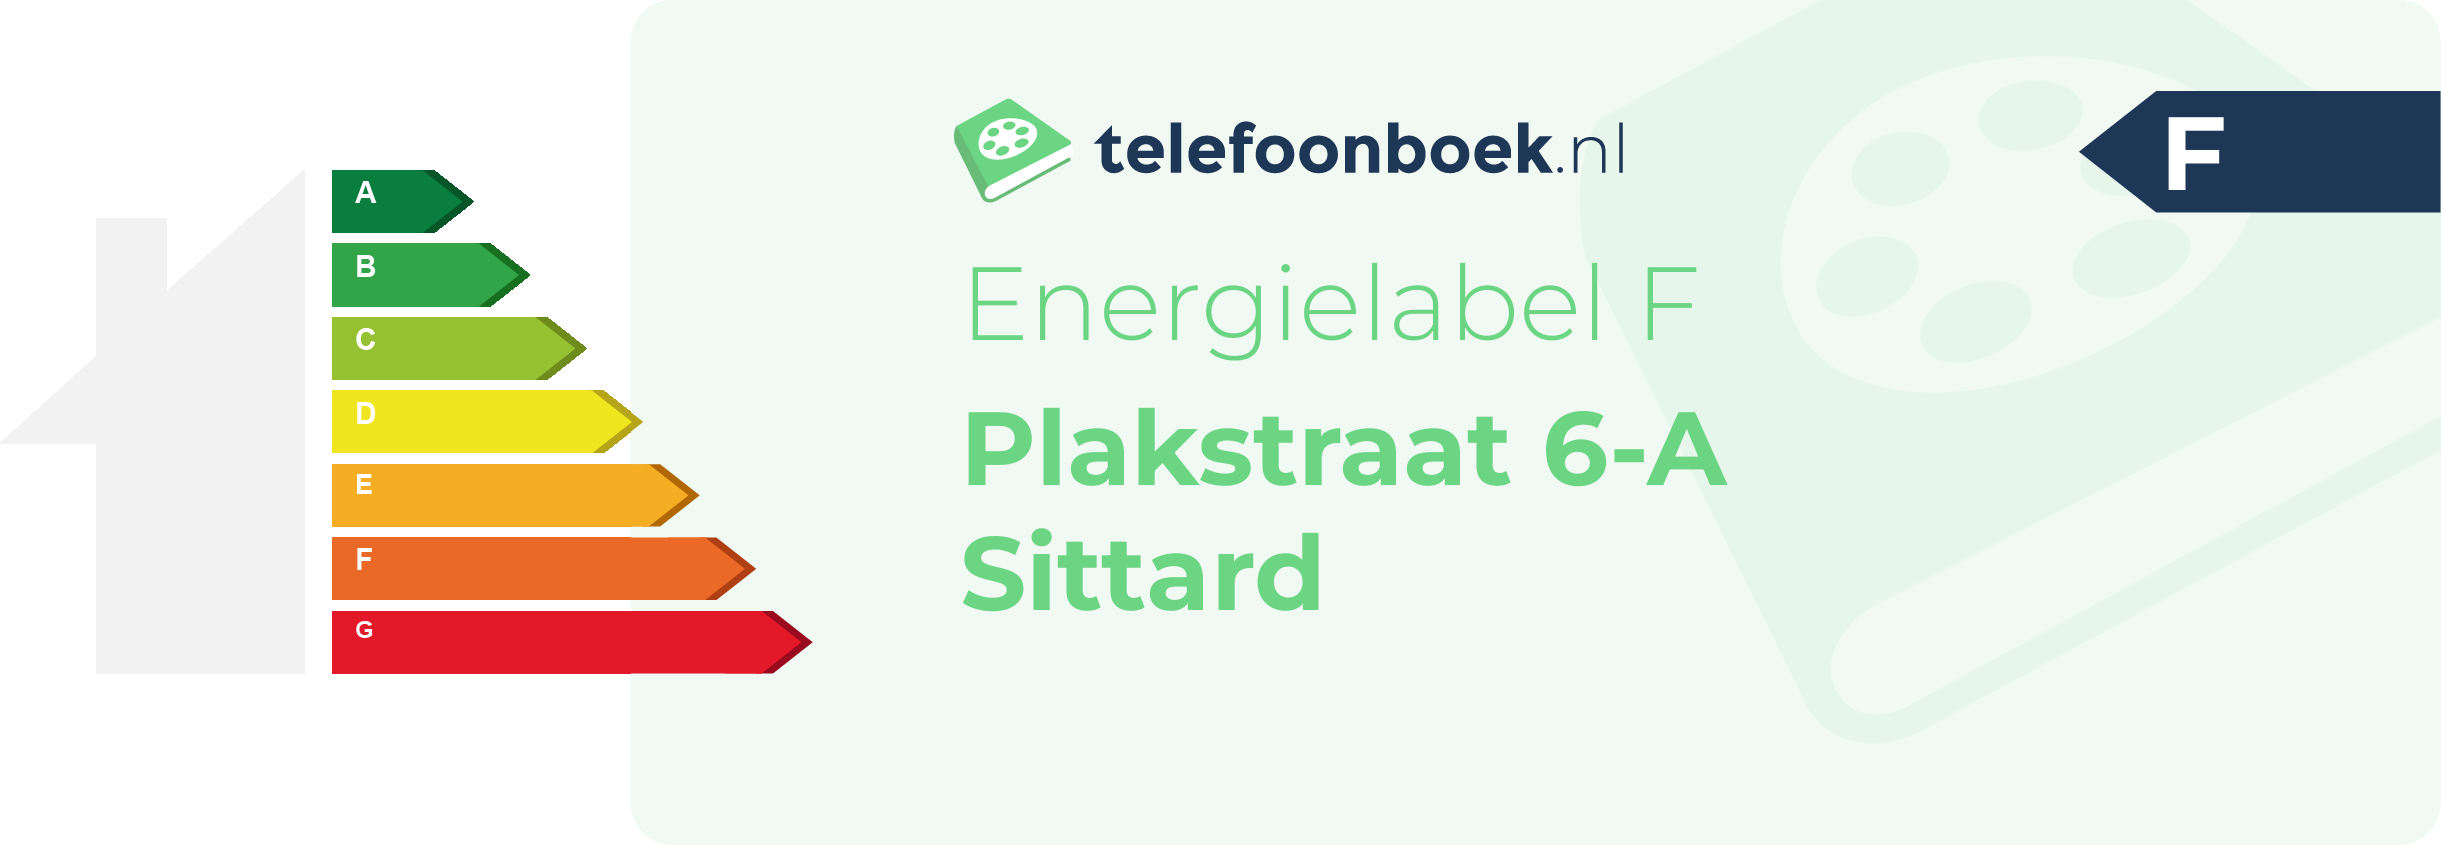 Energielabel Plakstraat 6-A Sittard